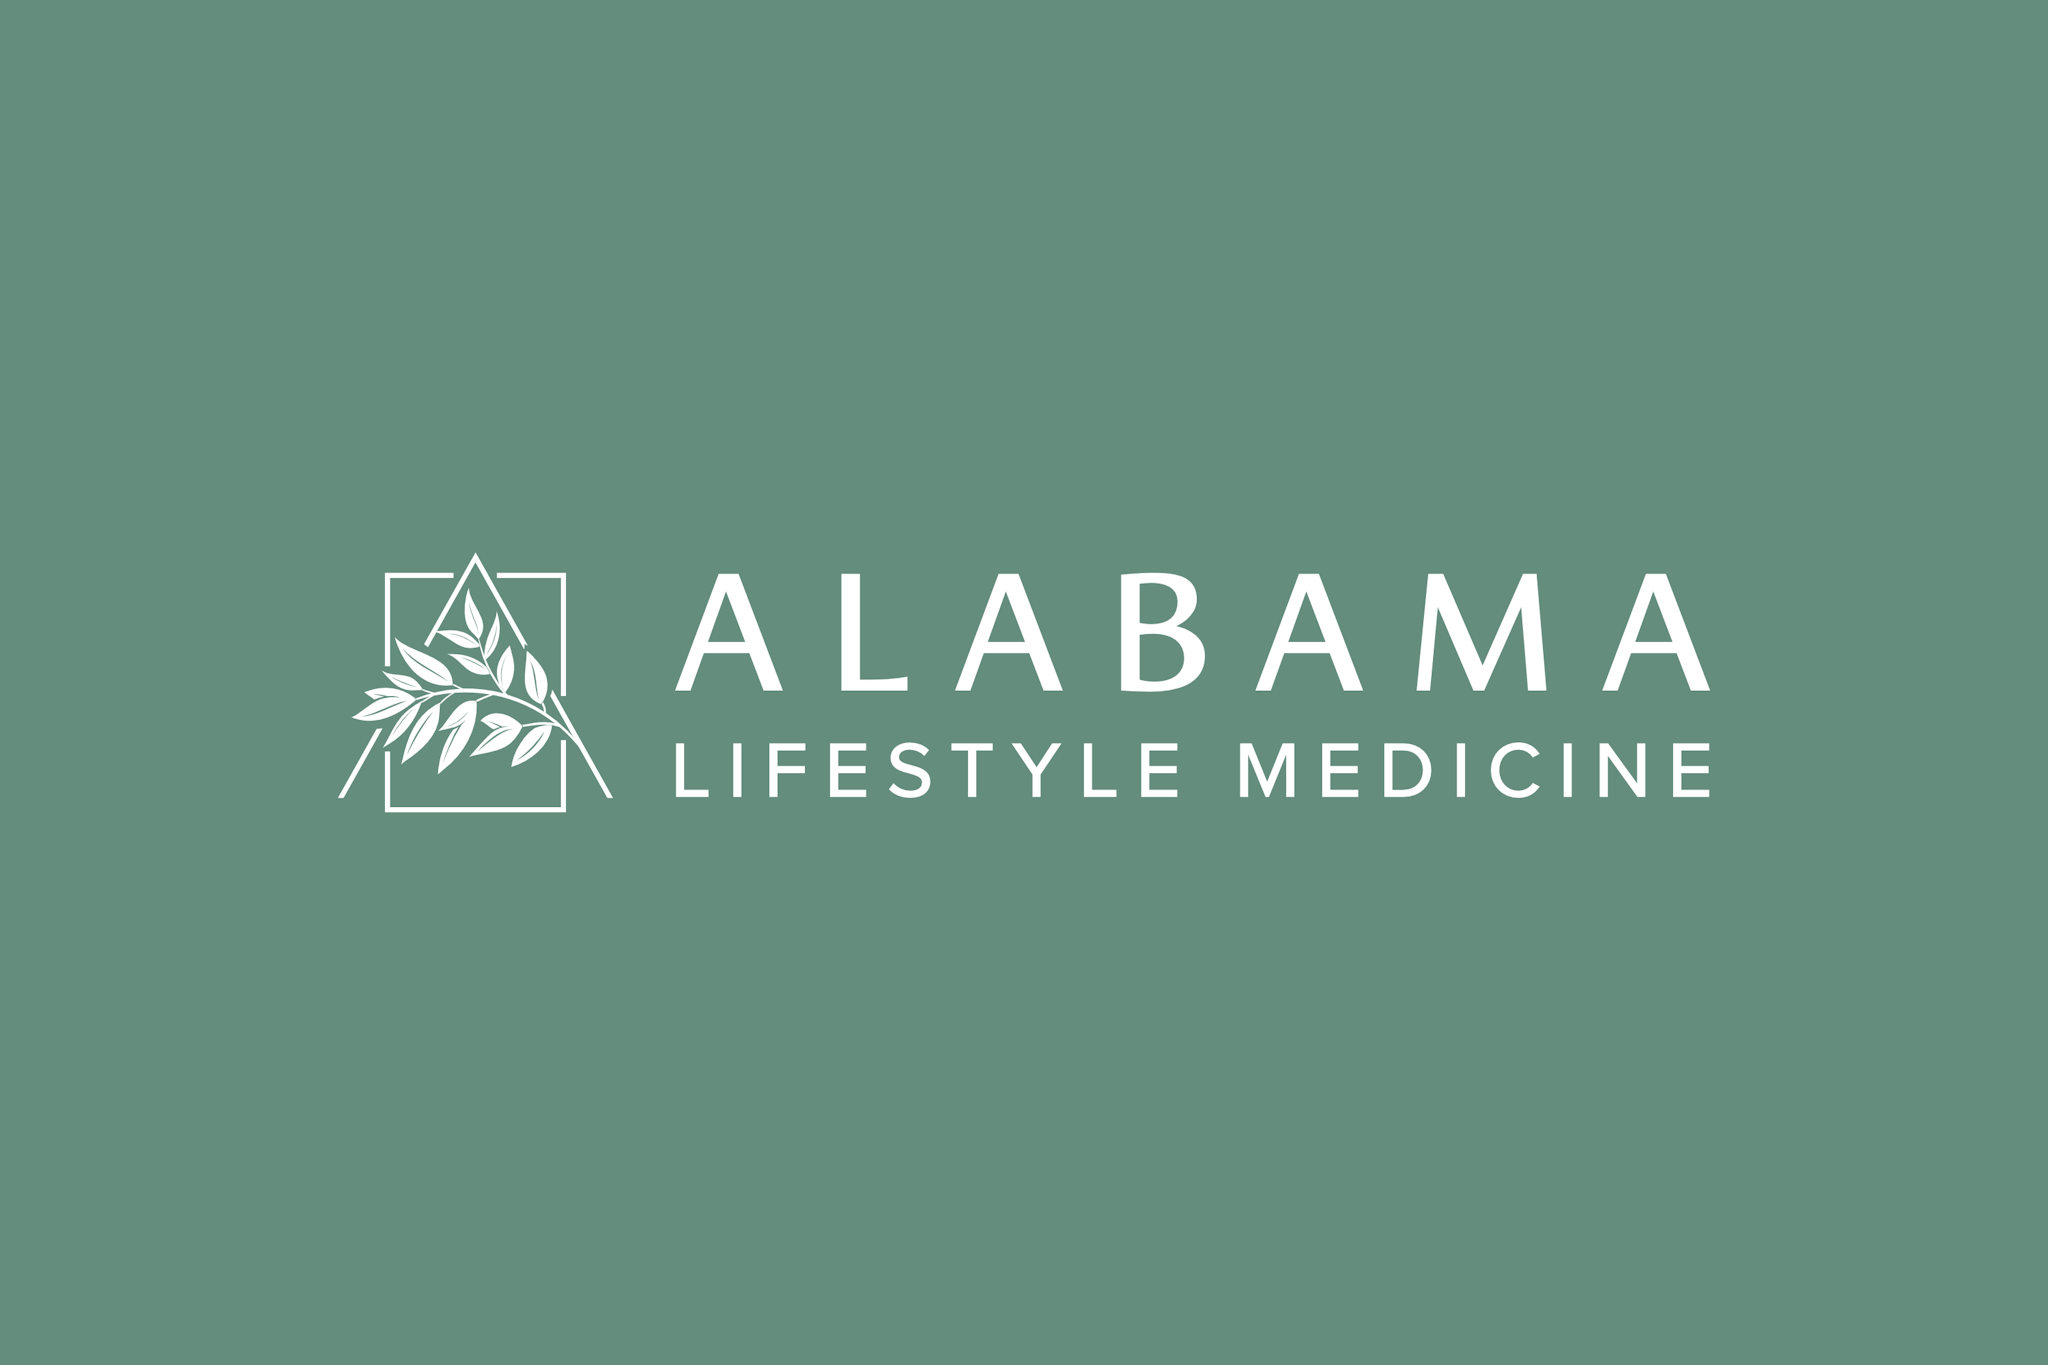 Alabama Lifestyle Medicine